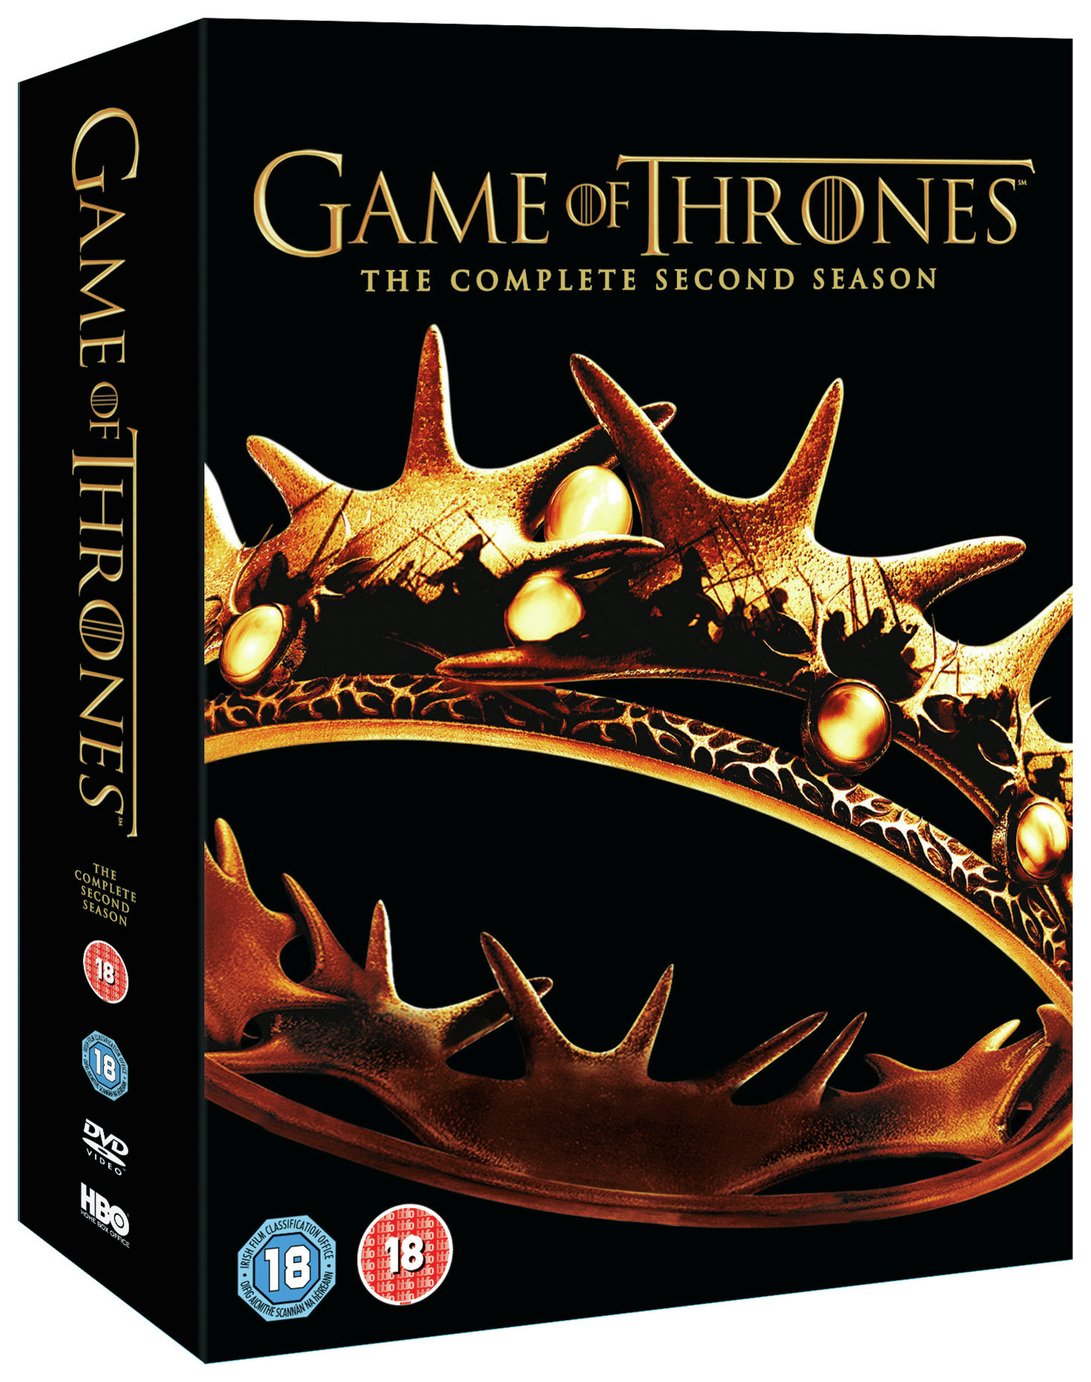 Game of Thrones Season 2 DVD